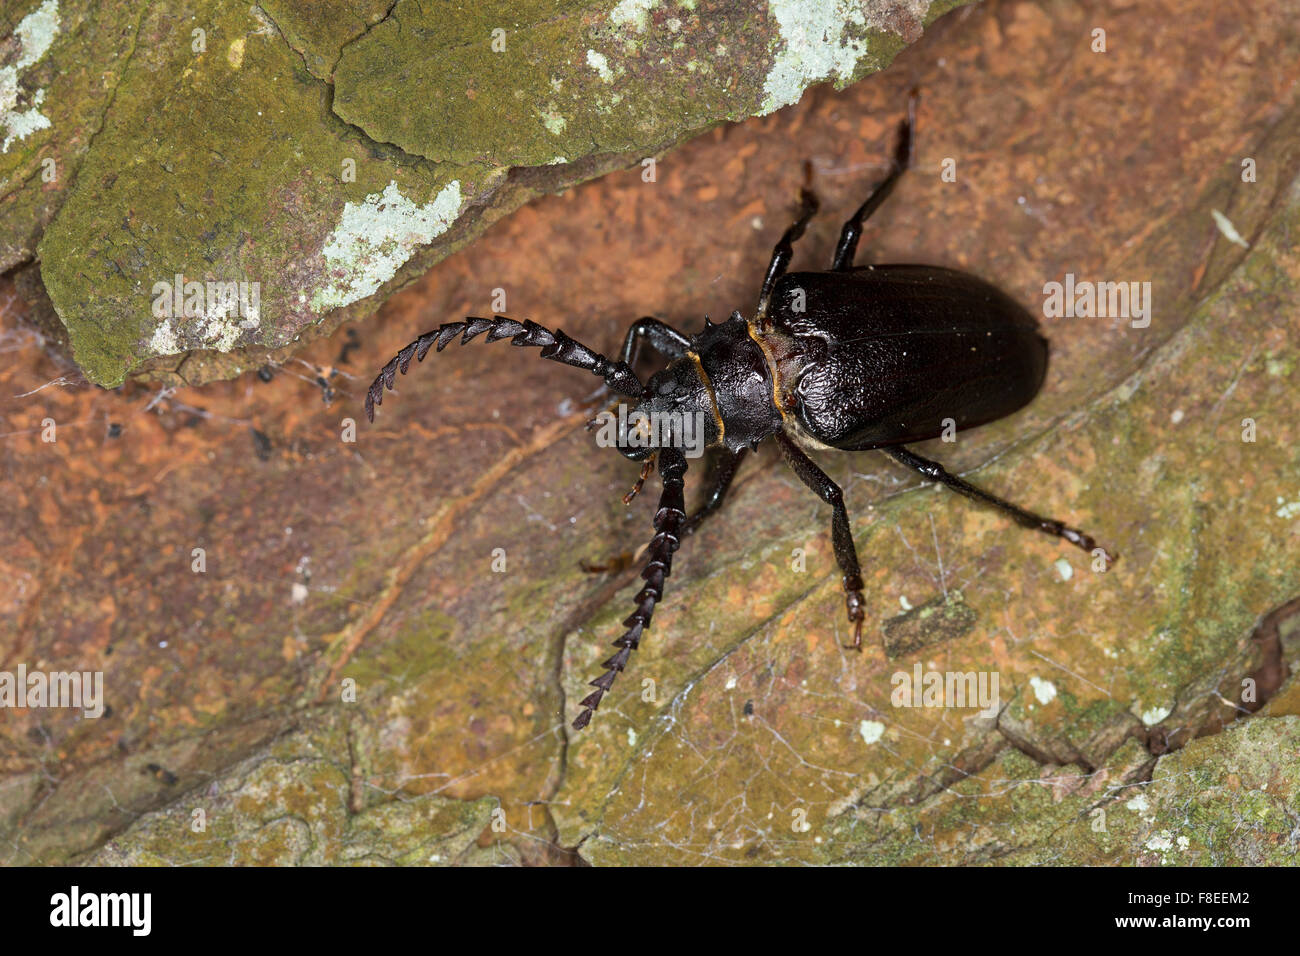 Tanner, sawyer, prionus longhorn beetle, male, Sägebock, Gerberbock, Männchen, Prionus coriarius, Prione tanneur, Prione coriace Stock Photo